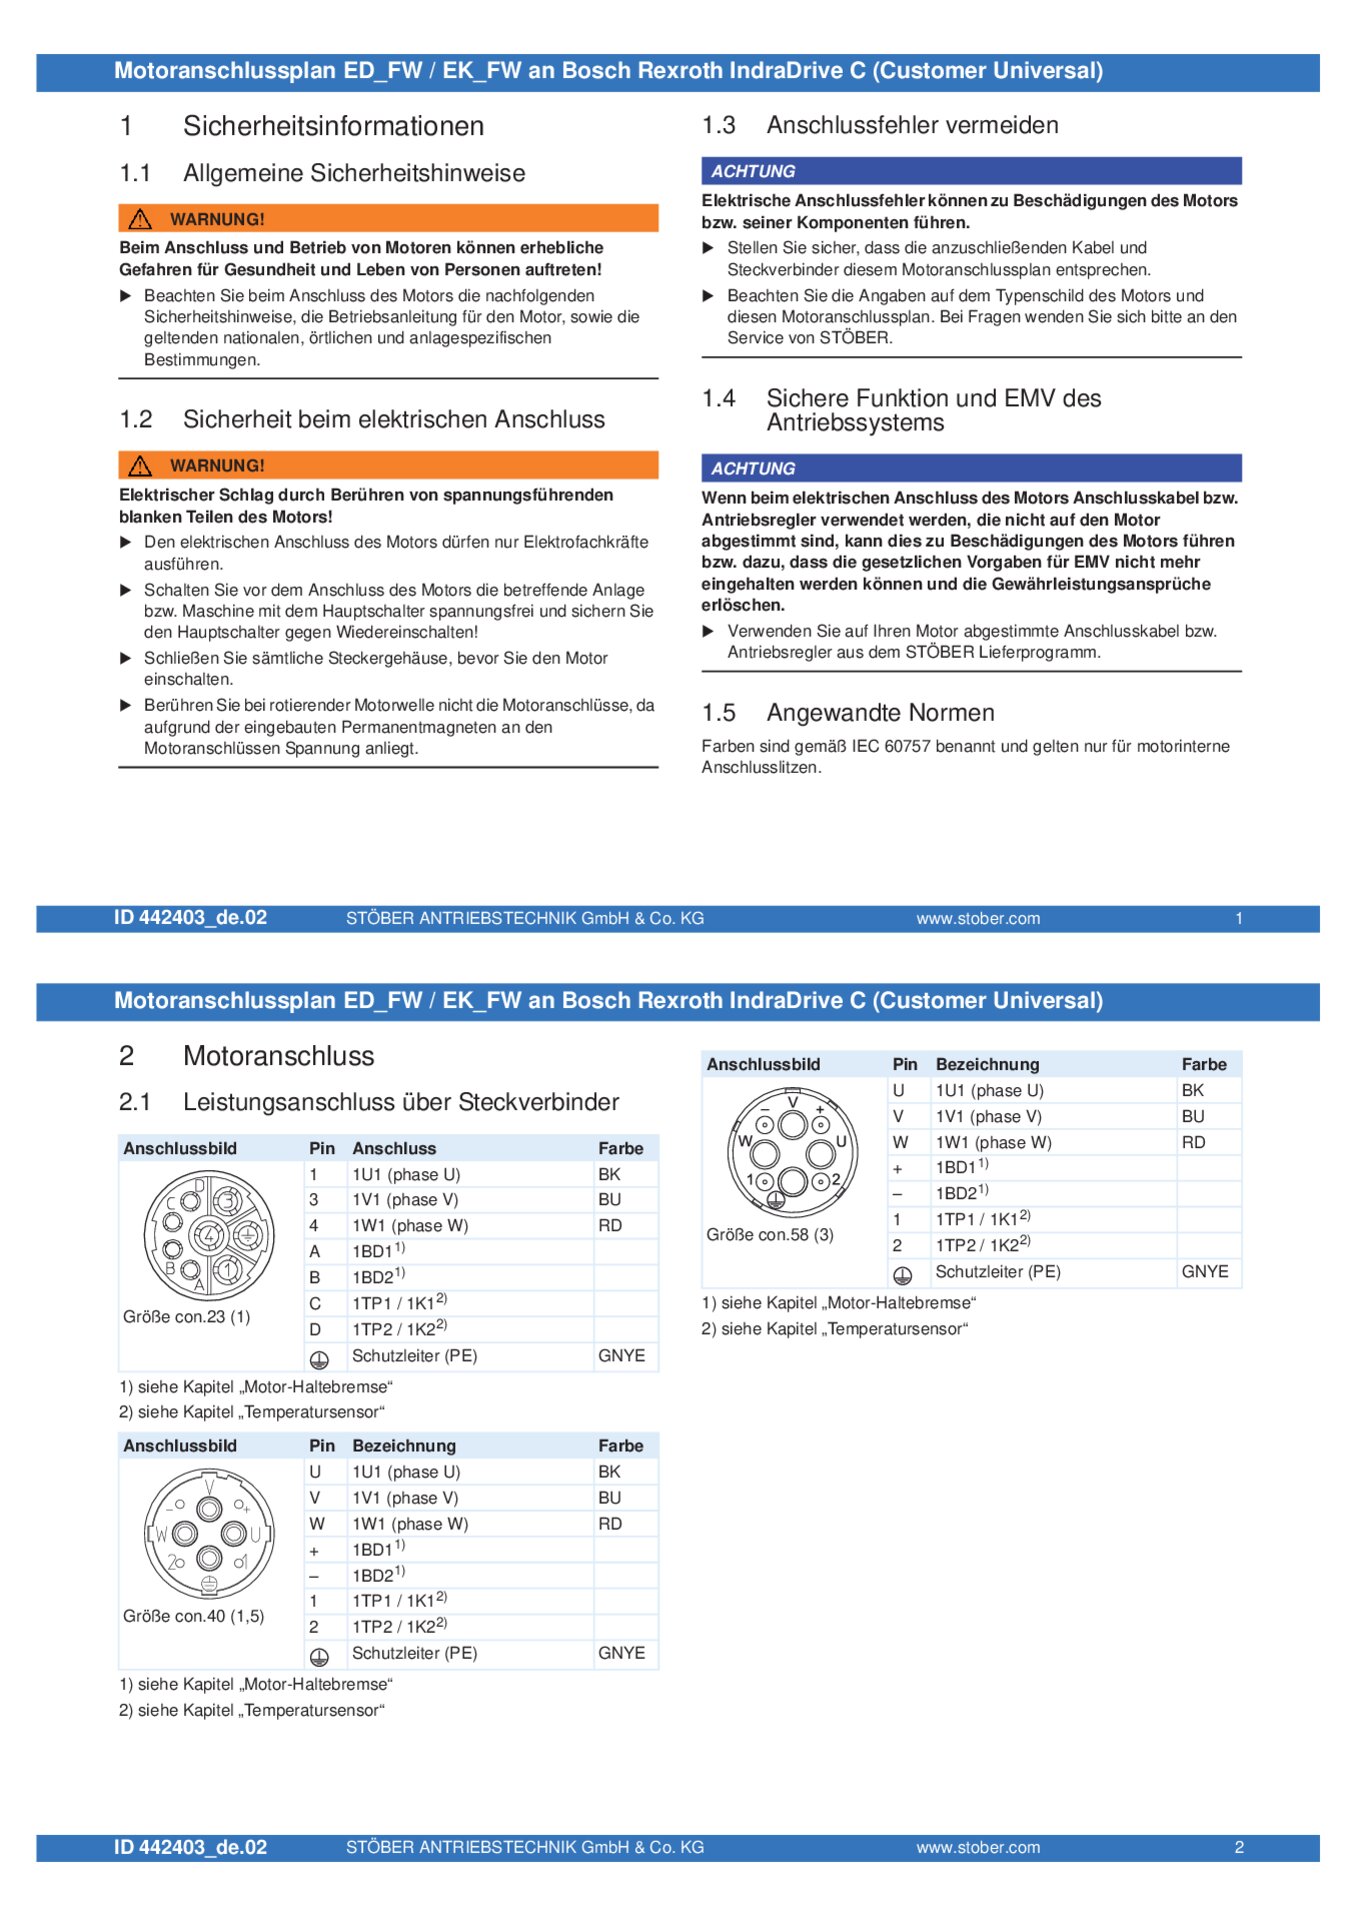 Schema di allacciamento ED_FW / EK_FW a Bosch Rexroth Customer Universal